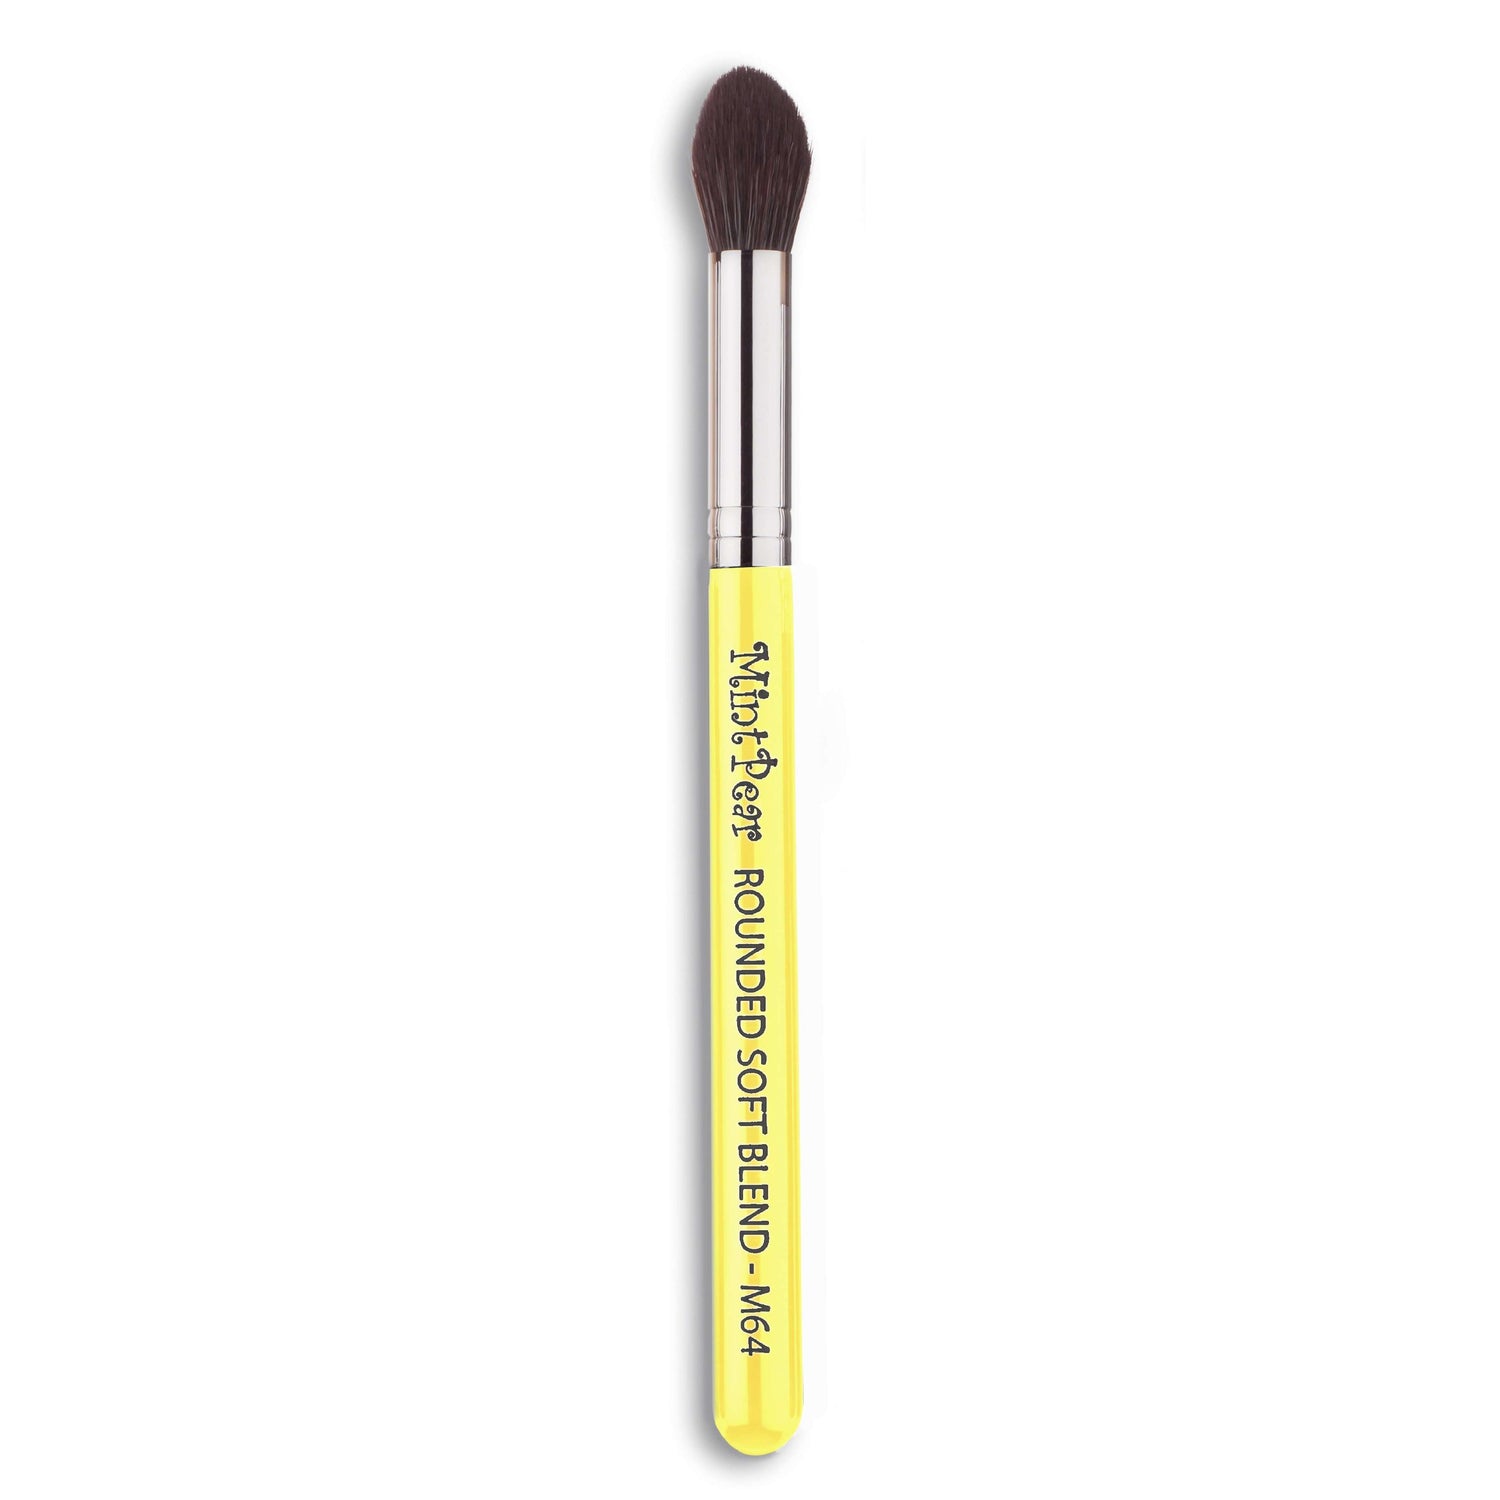 The Best Selling Makeup Brush for Blending and Applying Makeup,  Highlighter, Setting Powder – MintPear